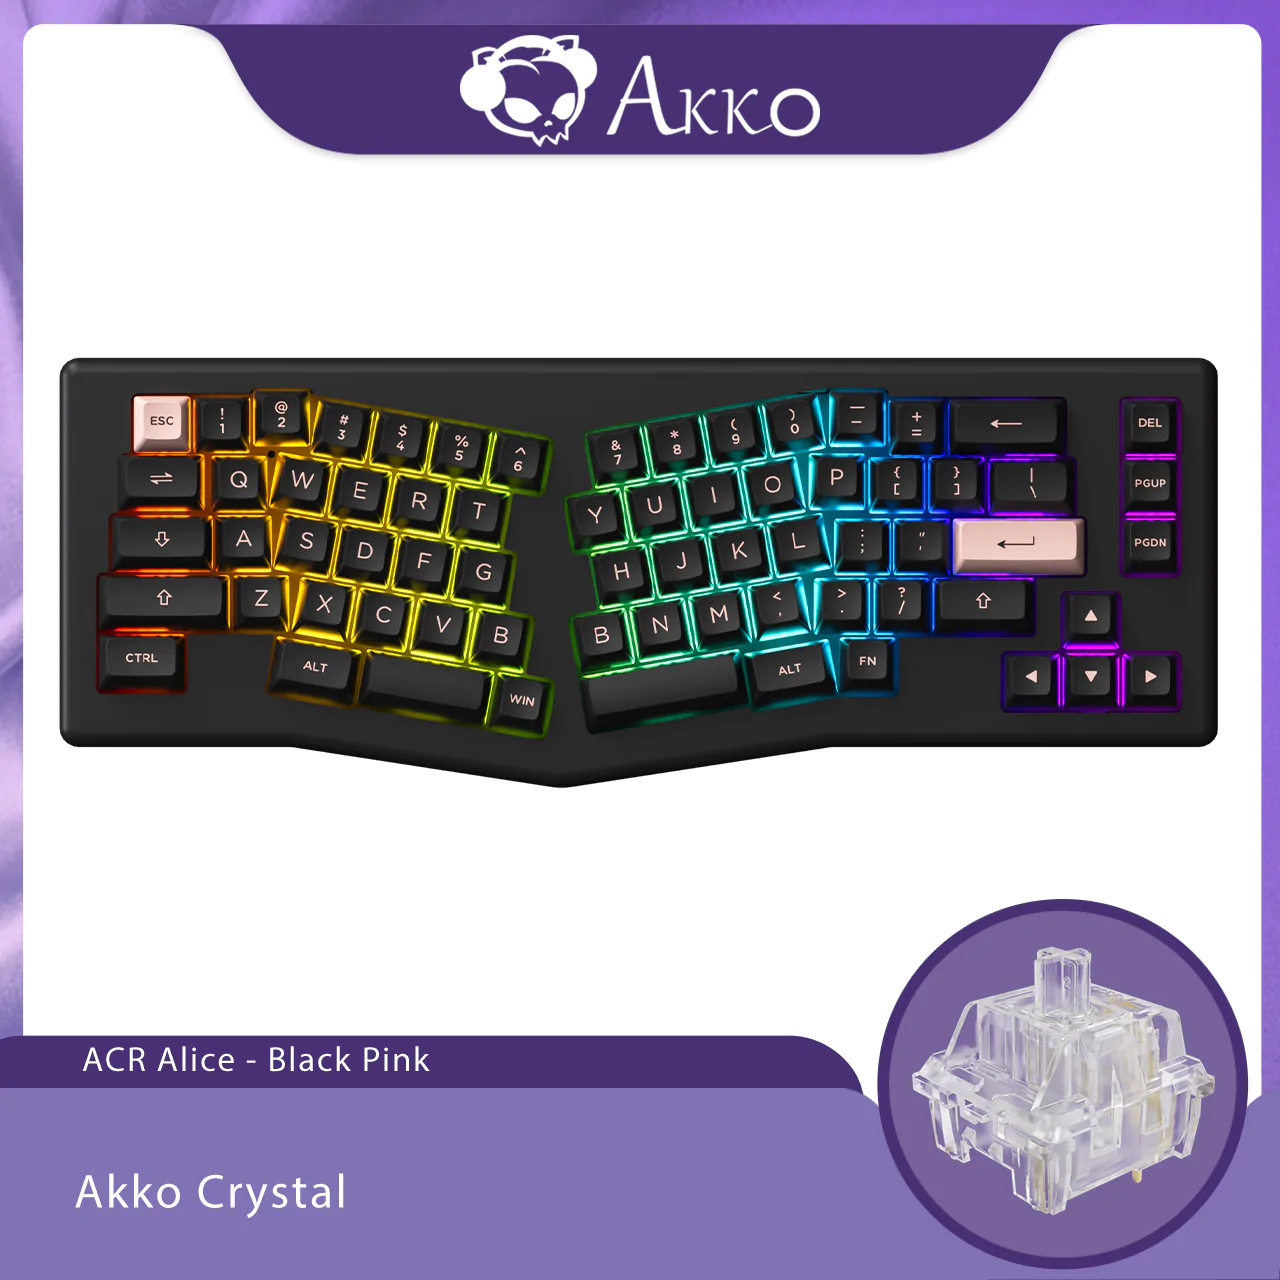 Akko ACR Pro Alice Plus Keyboard